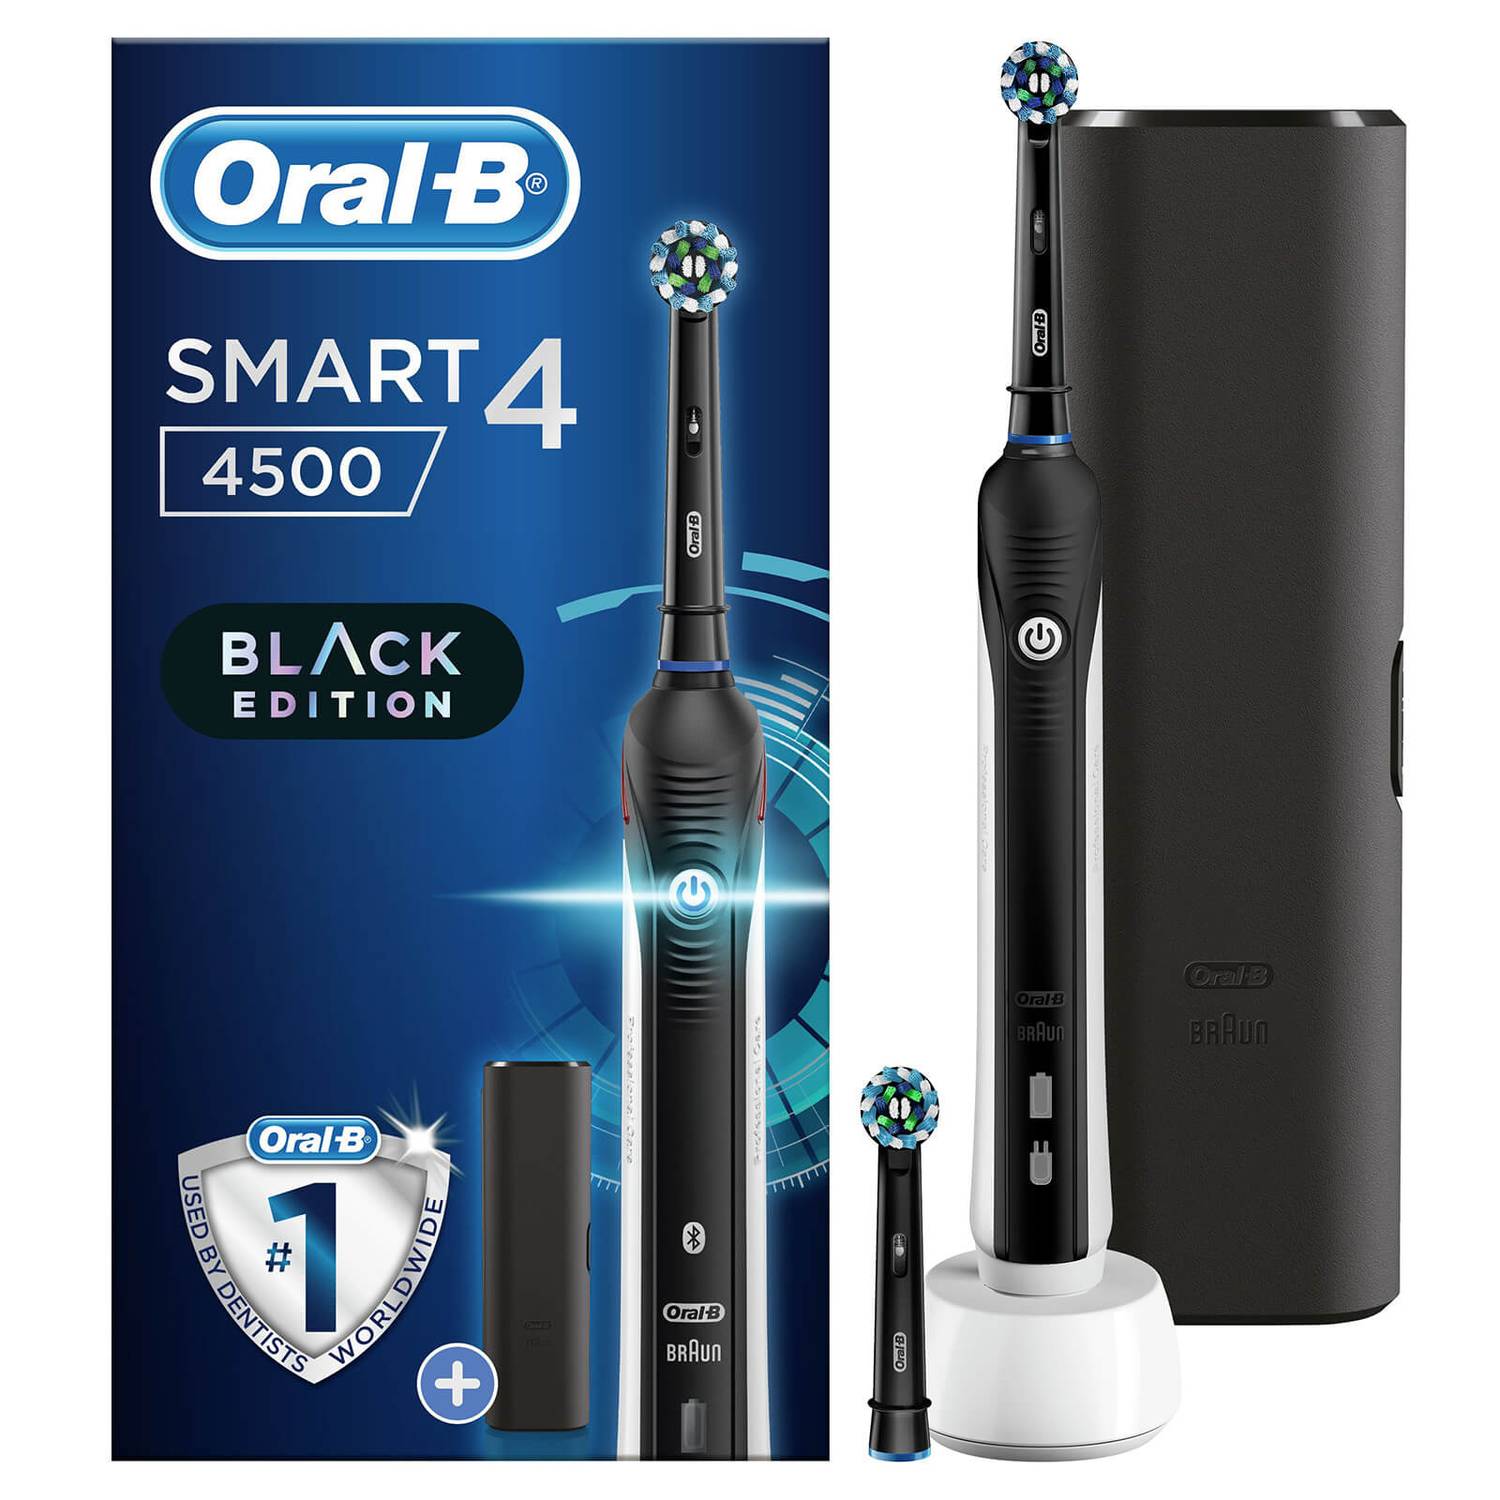 Oral-B toothbrushes